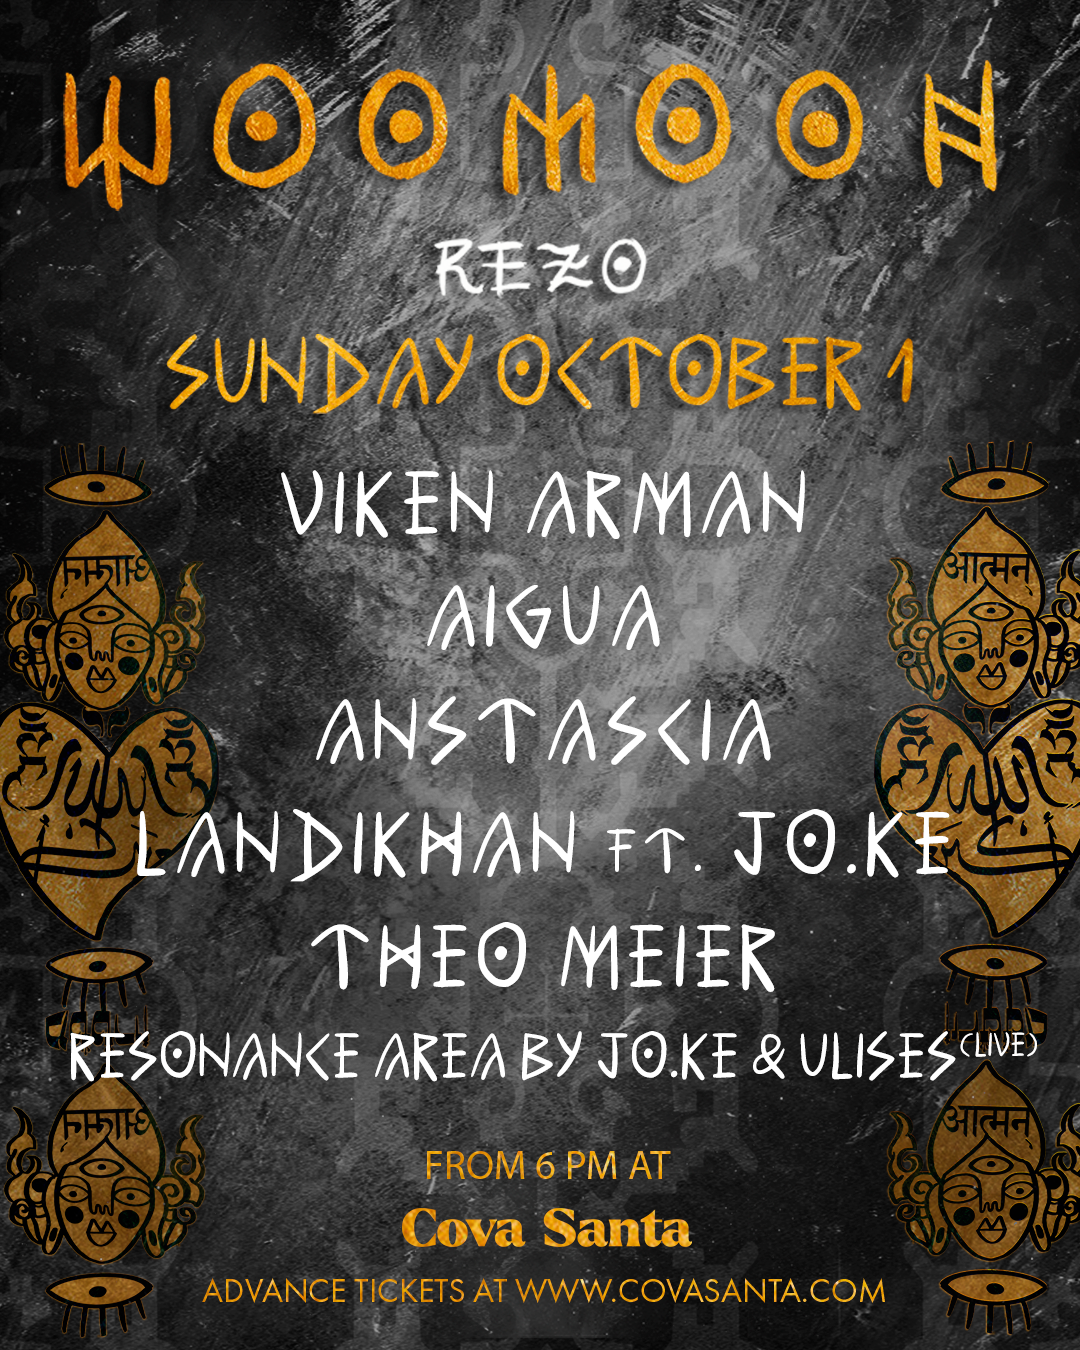 WooMooN Sunday, October 1st - Página frontal